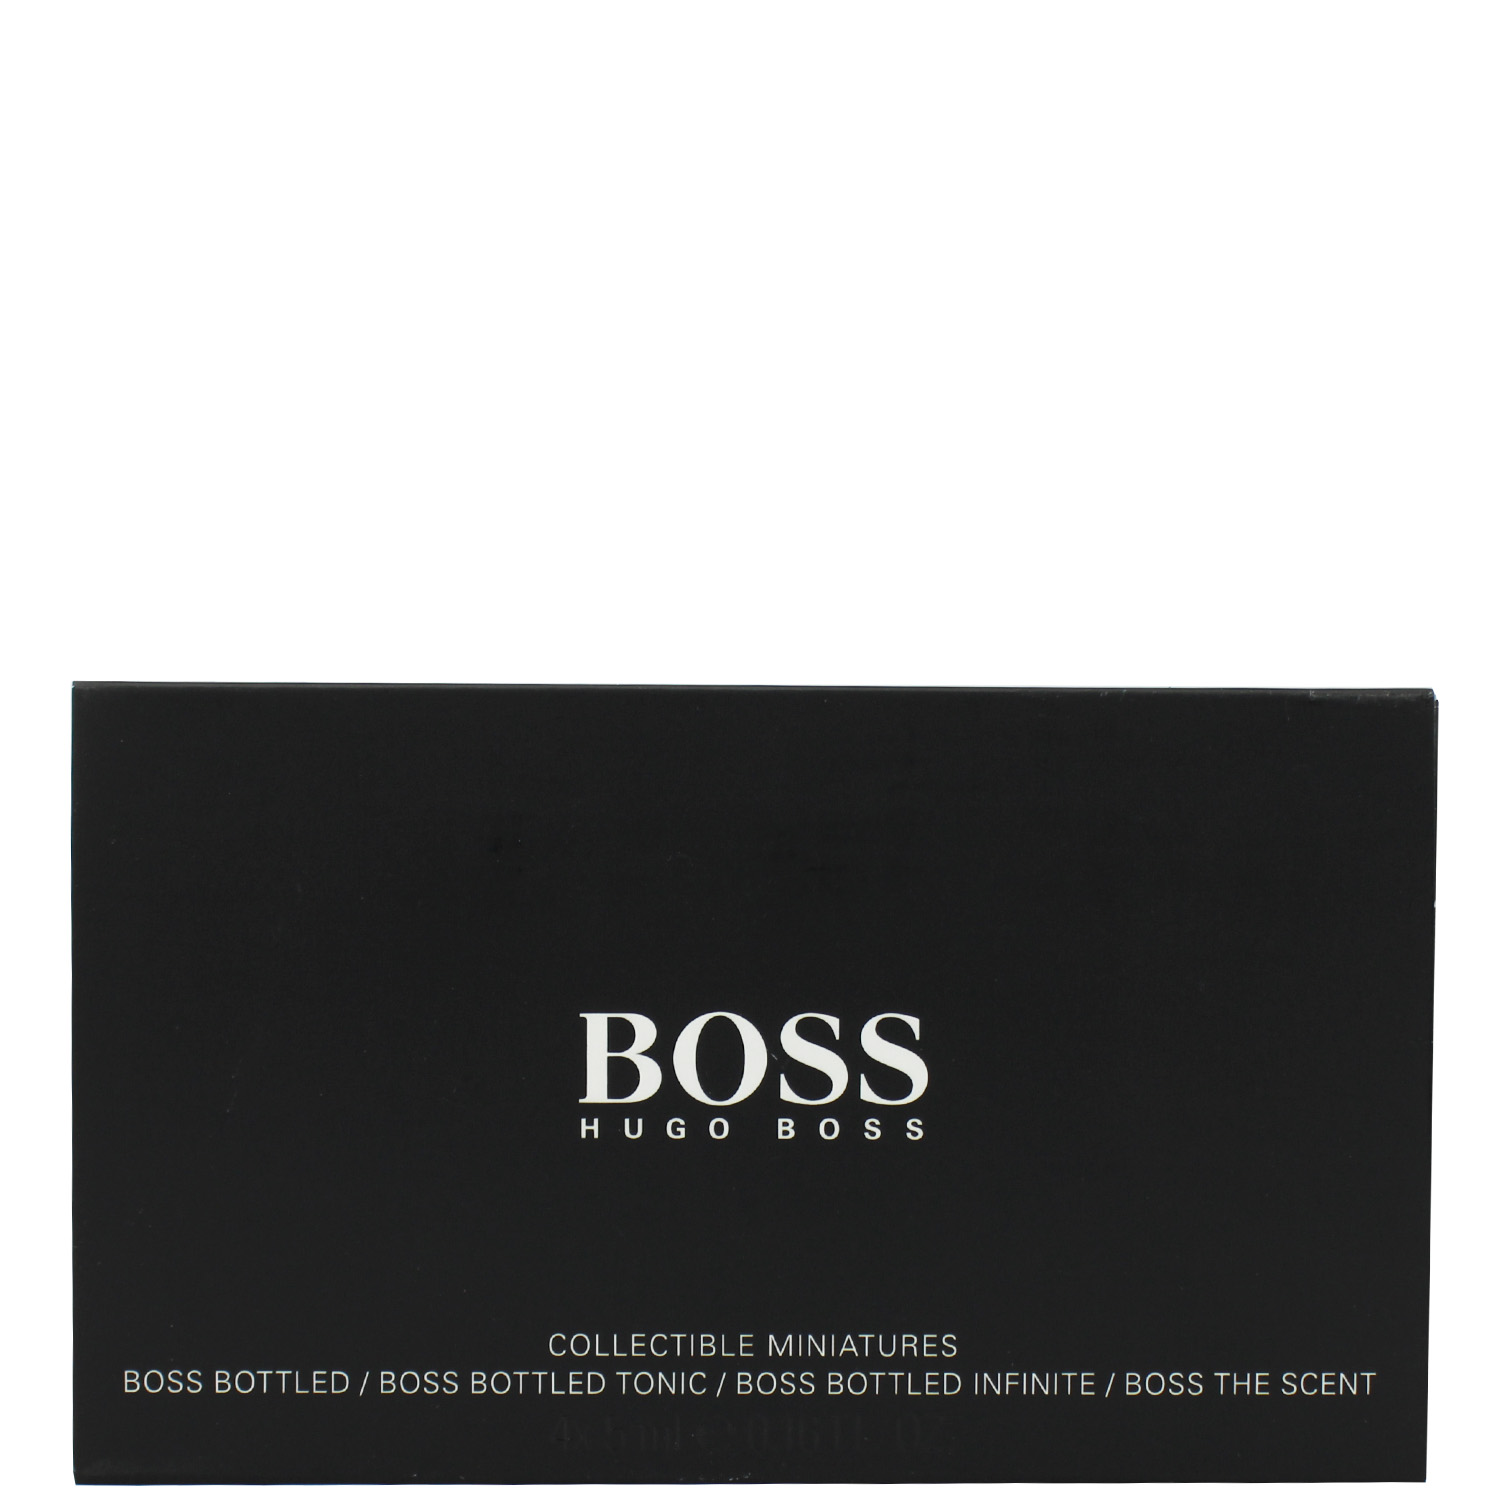 Hugo Boss Collectible Miniatur Set for Men 4 x 5ml